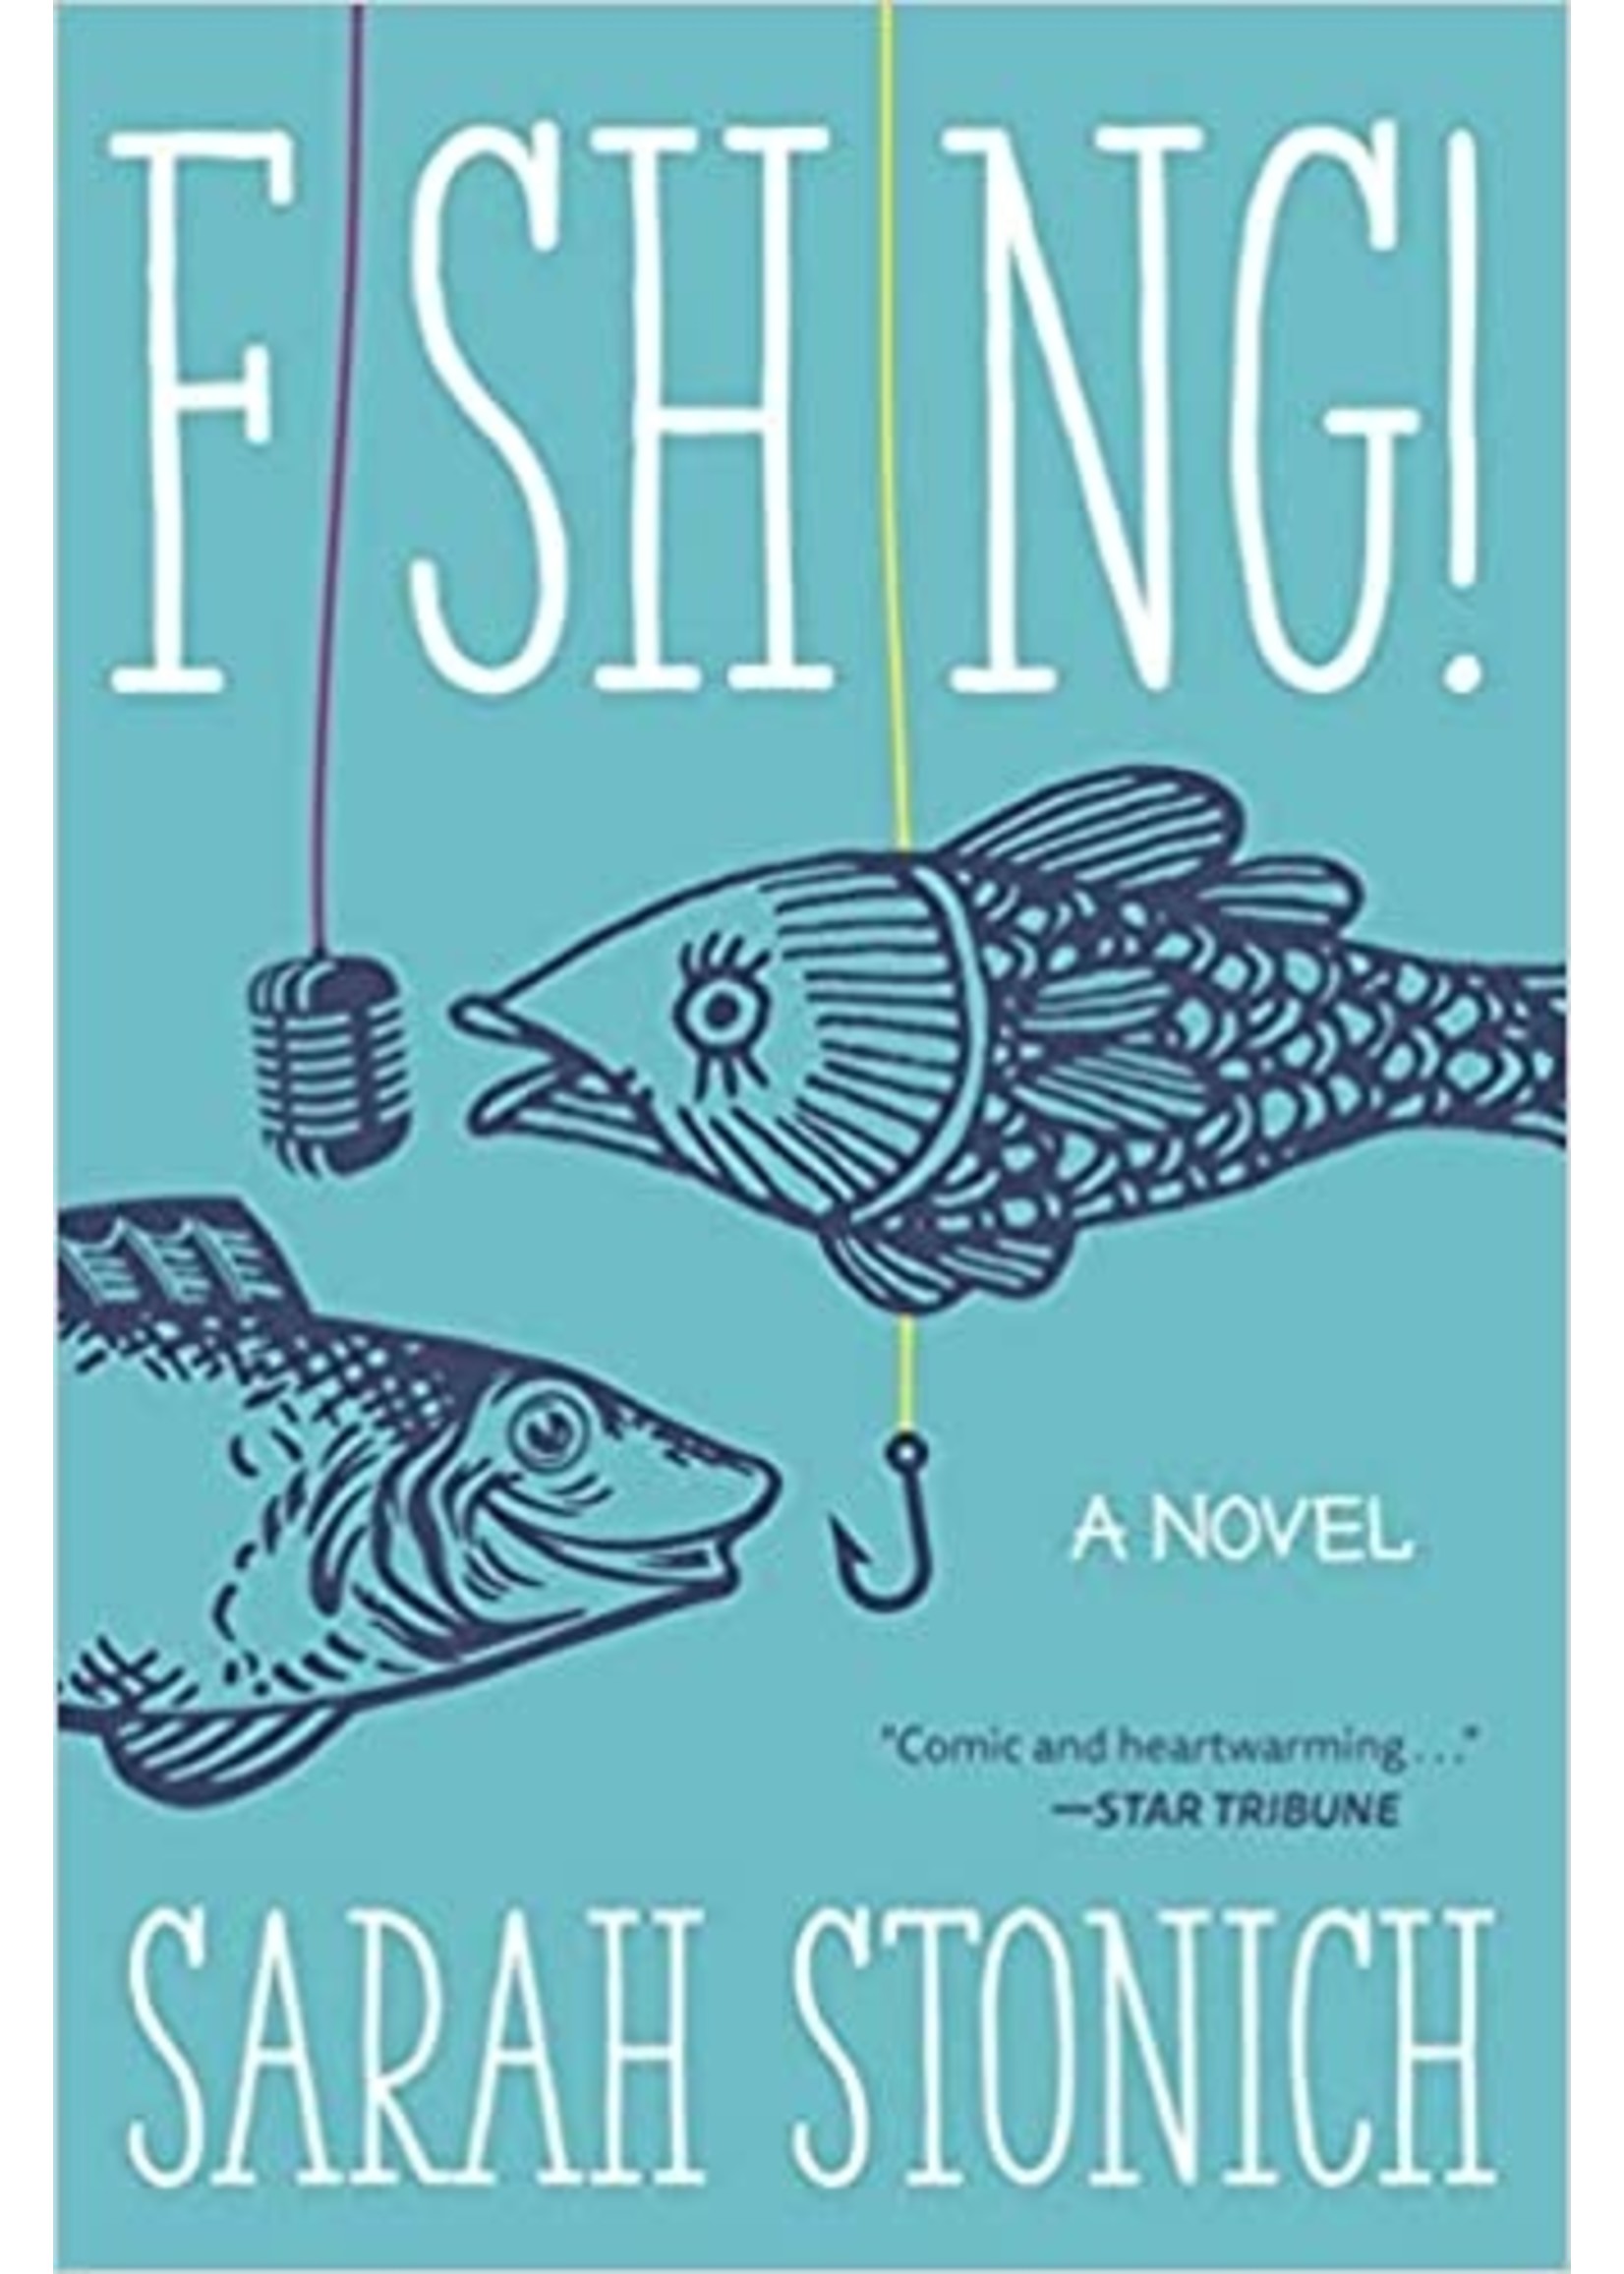 Fishing! by Sarah Stonich